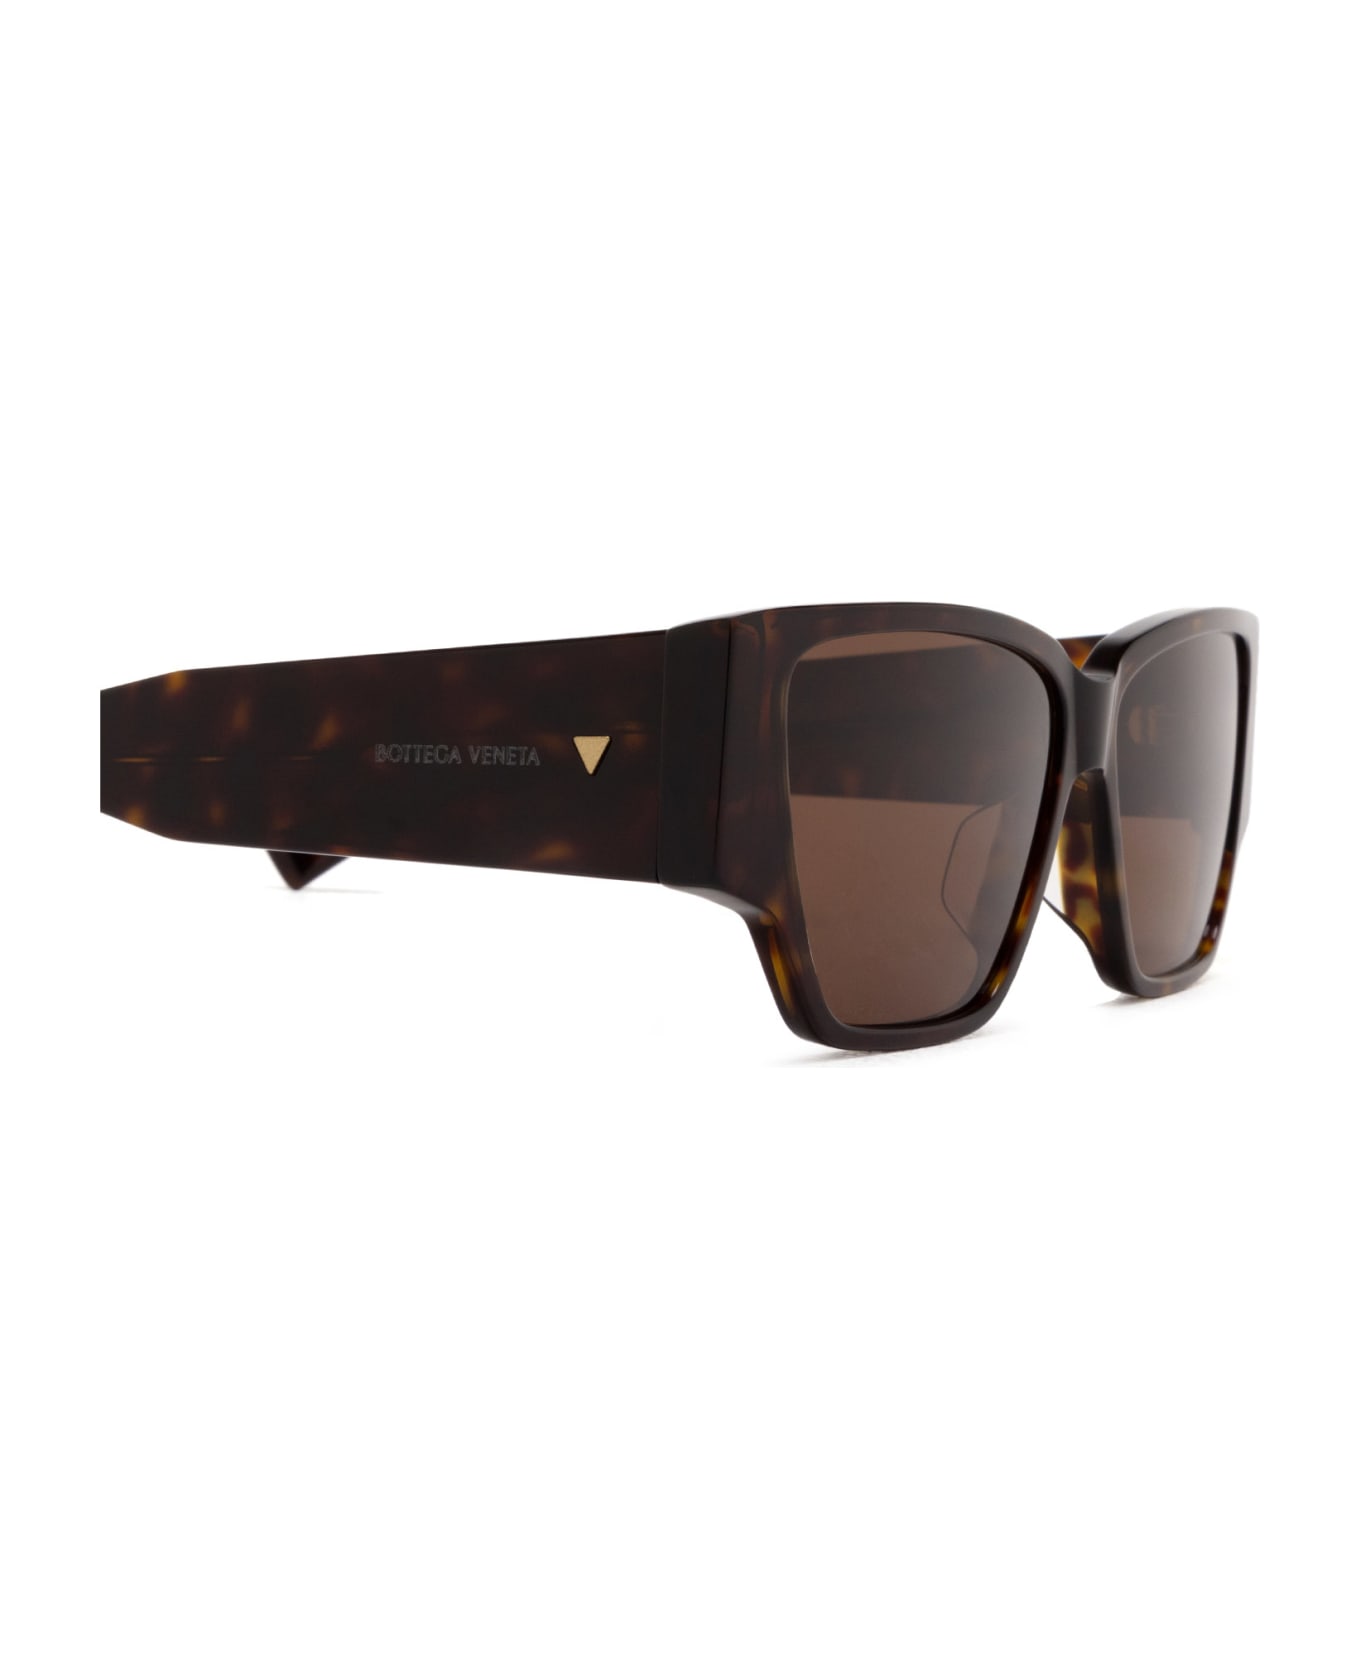 Bottega Veneta Eyewear Bv1285s Havana Sunglasses - Havana サングラス